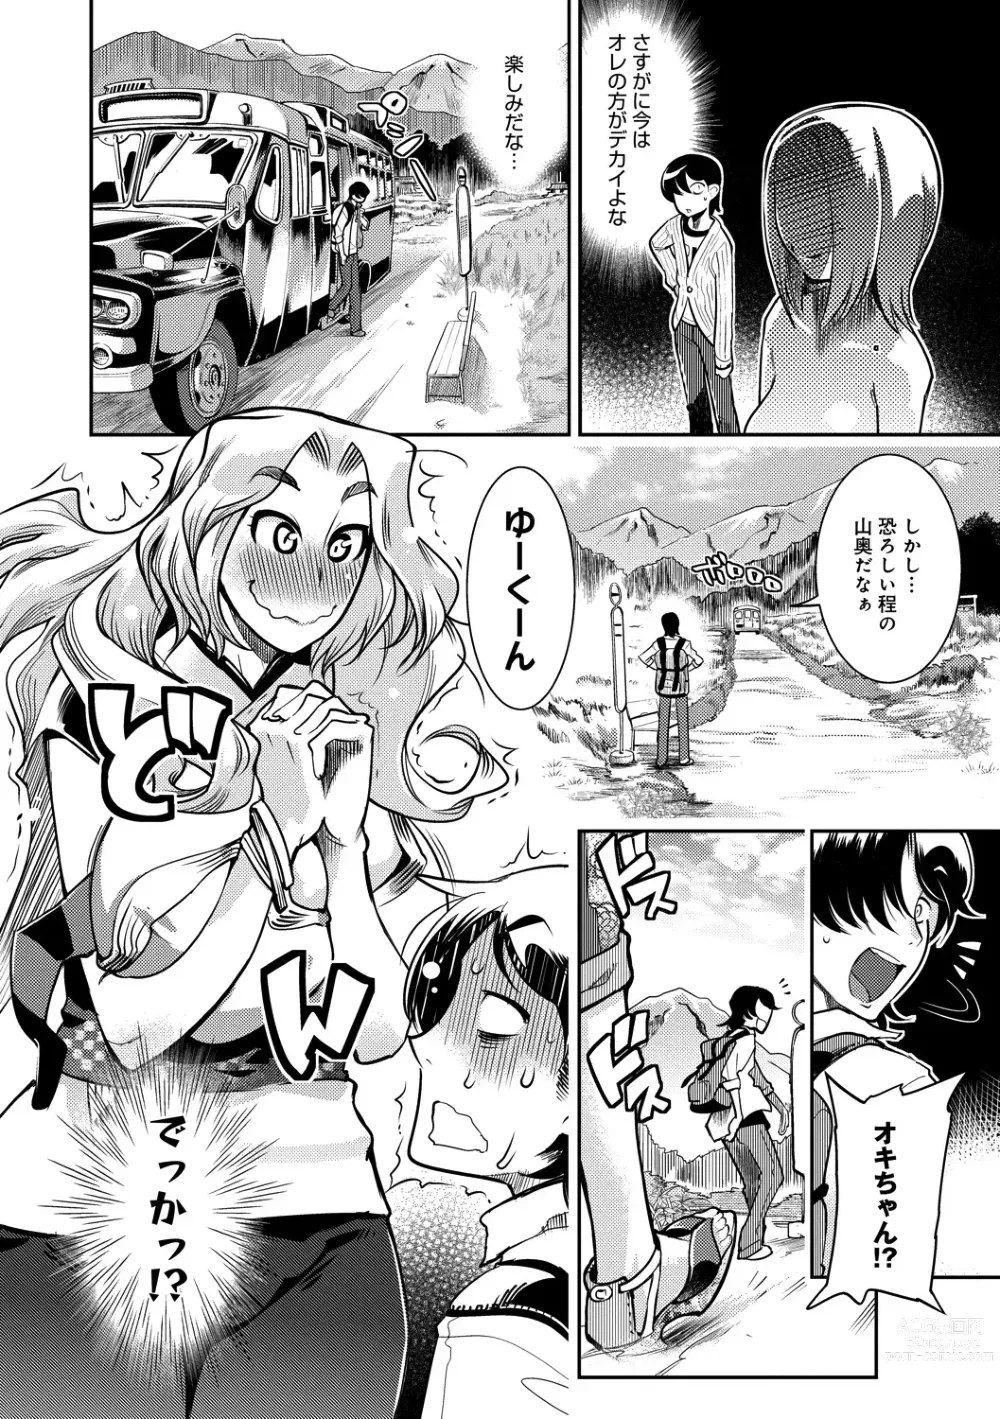 Page 6 of manga Hamekko 3Peace!!!